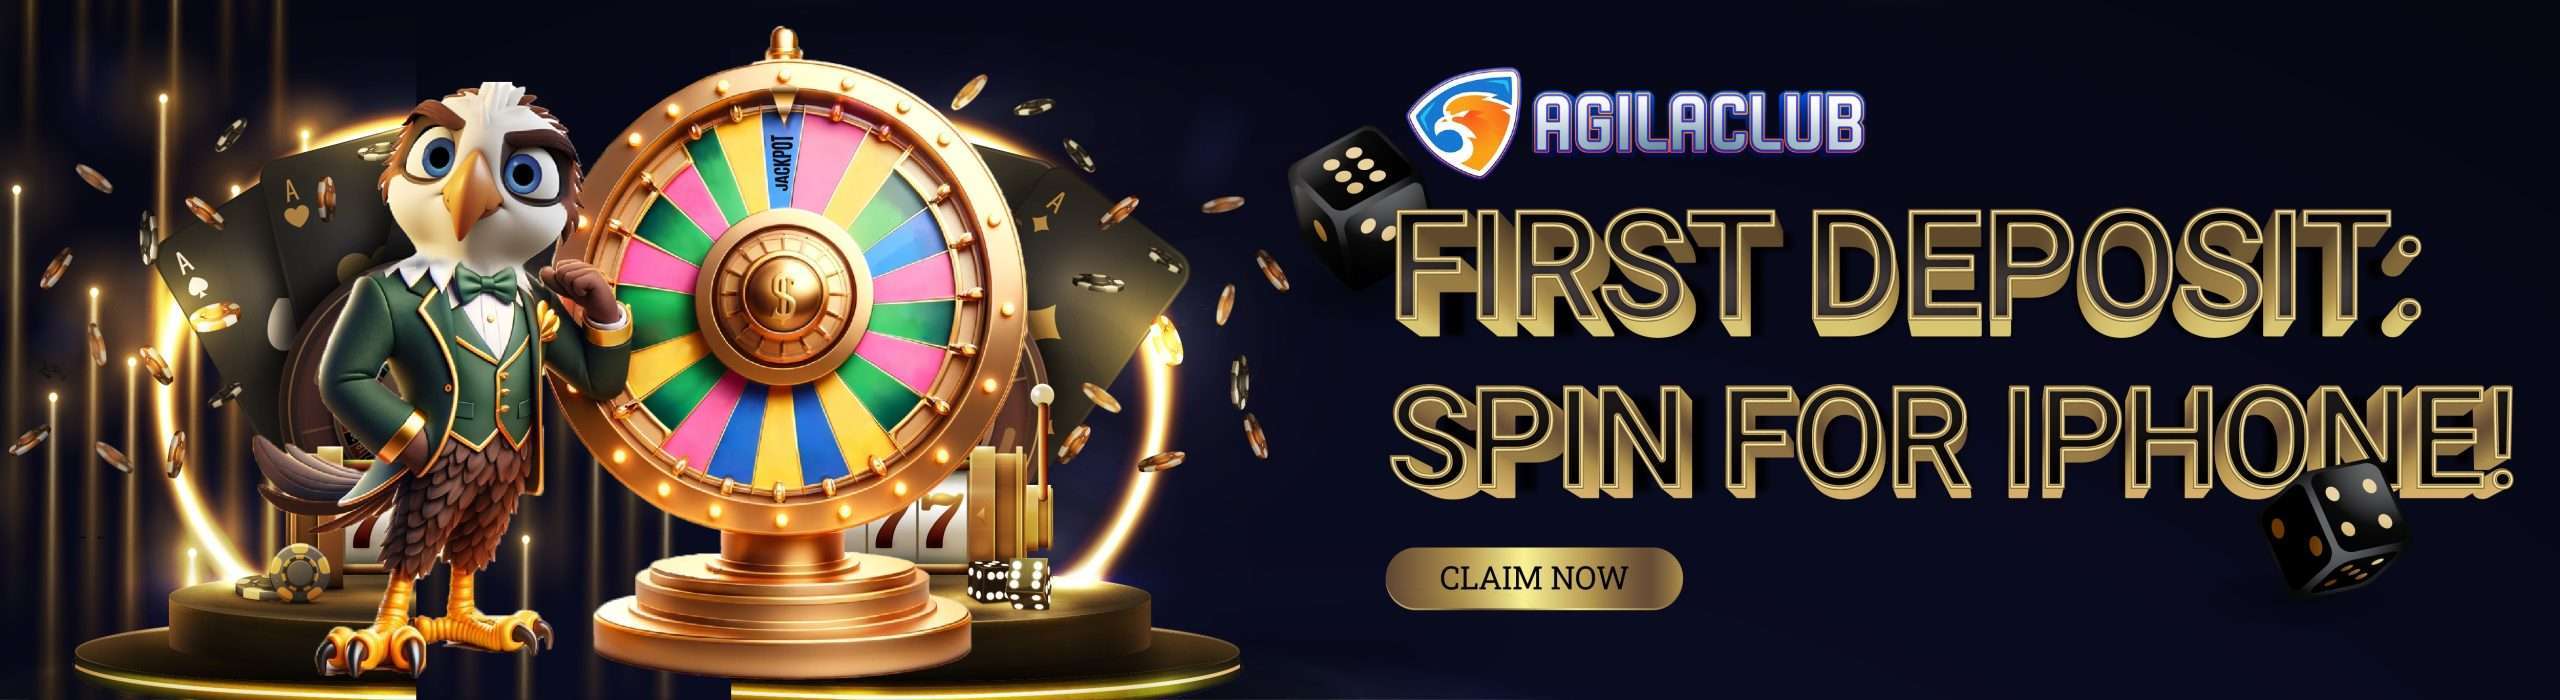 agilaclub app-first deposit spin iphone